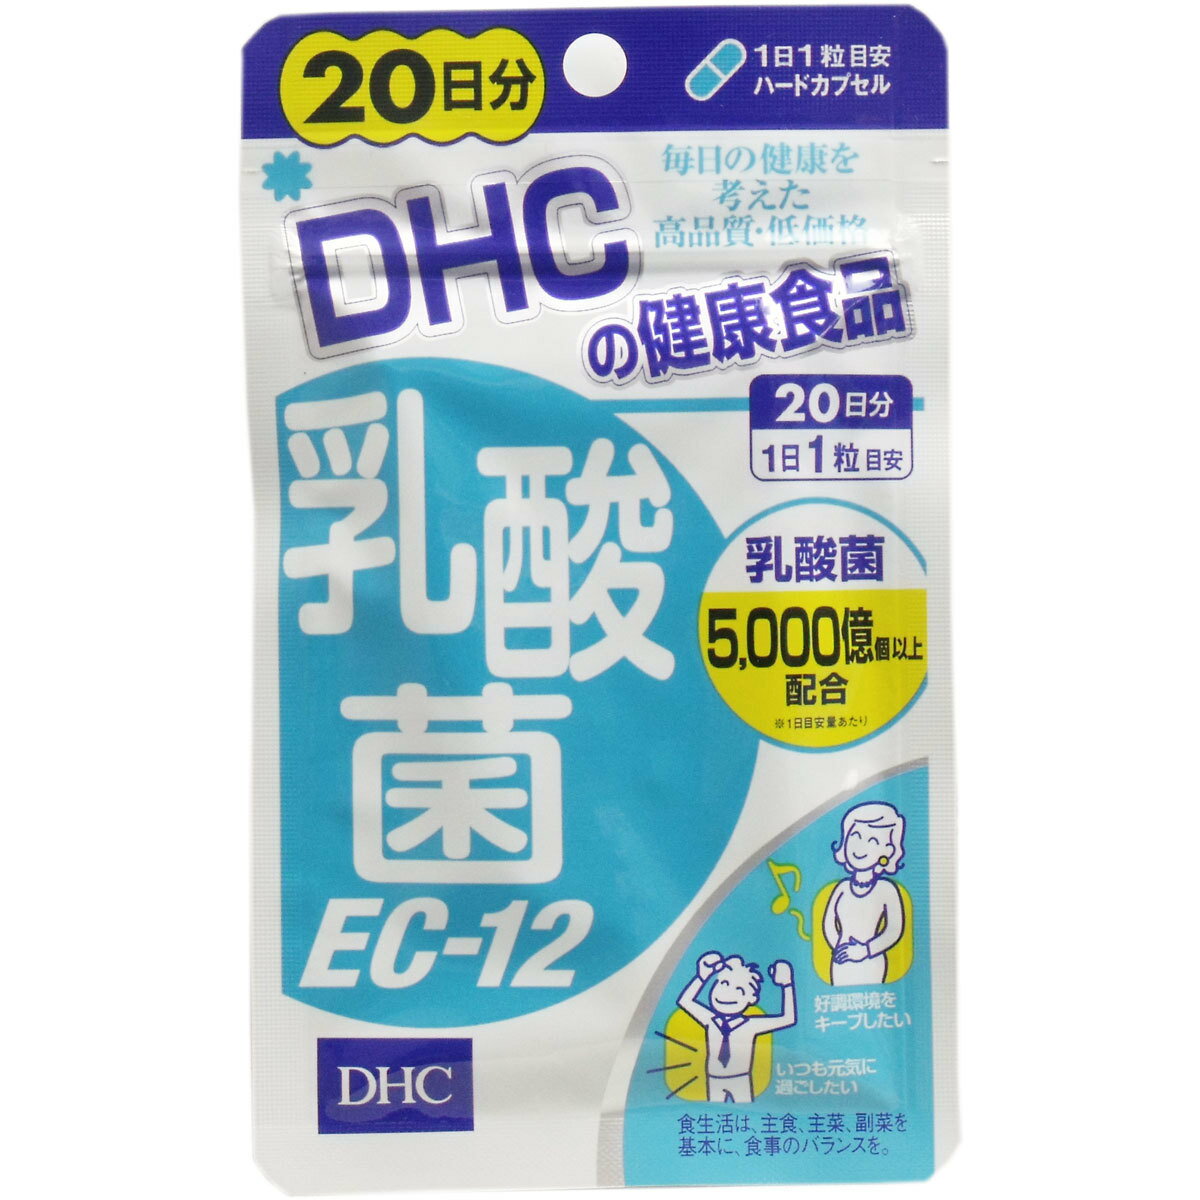 DHC _EC-12 20 20